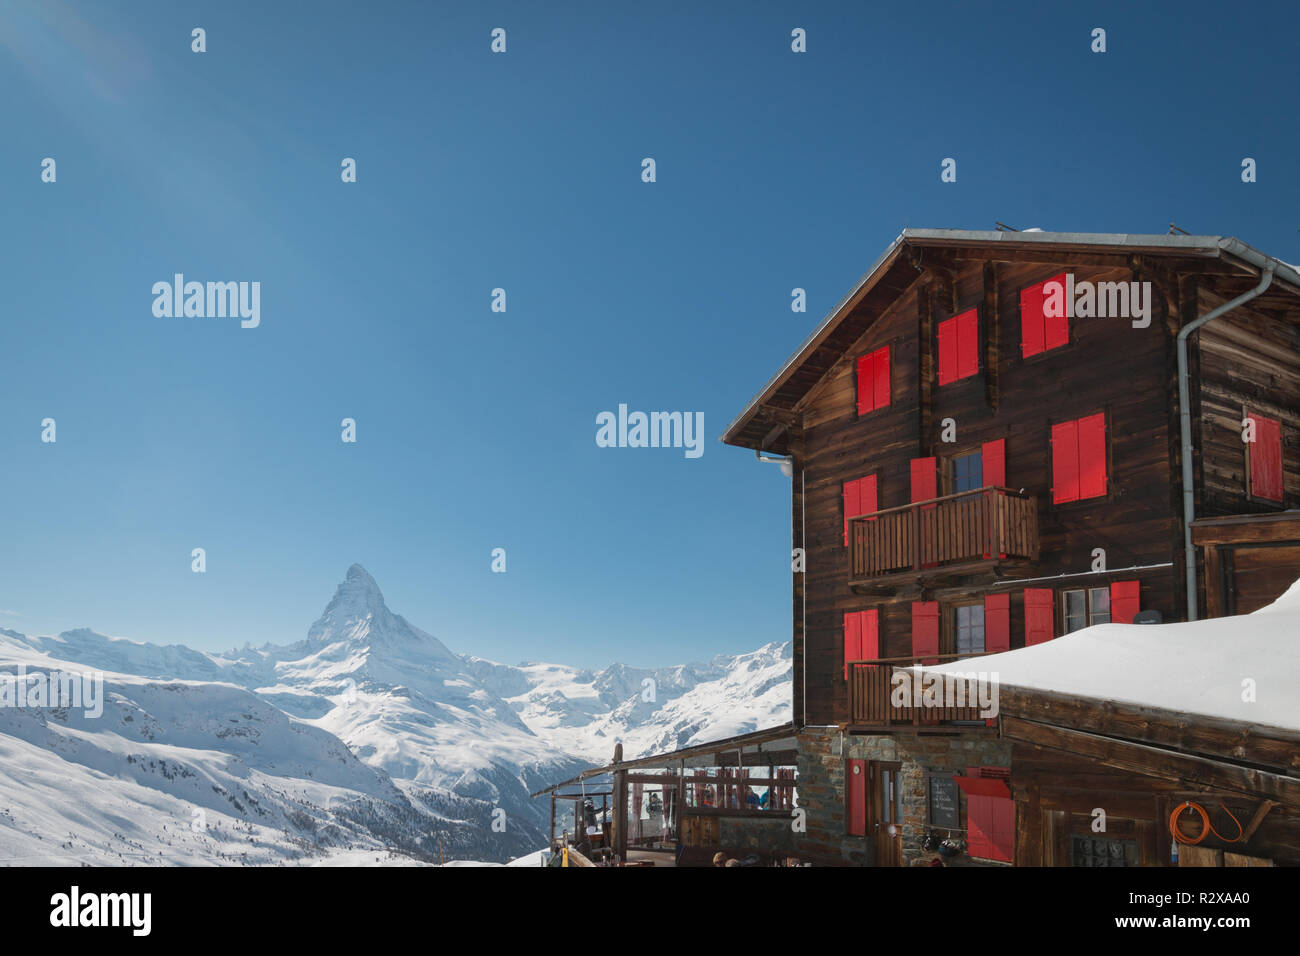 Zermatt, Switzerland - March 21, 2018: Hotel and mountain restaurant Fluhalp at elevation of 2606 meters in the skiing and hiking area of of Zermatt,  Stock Photo